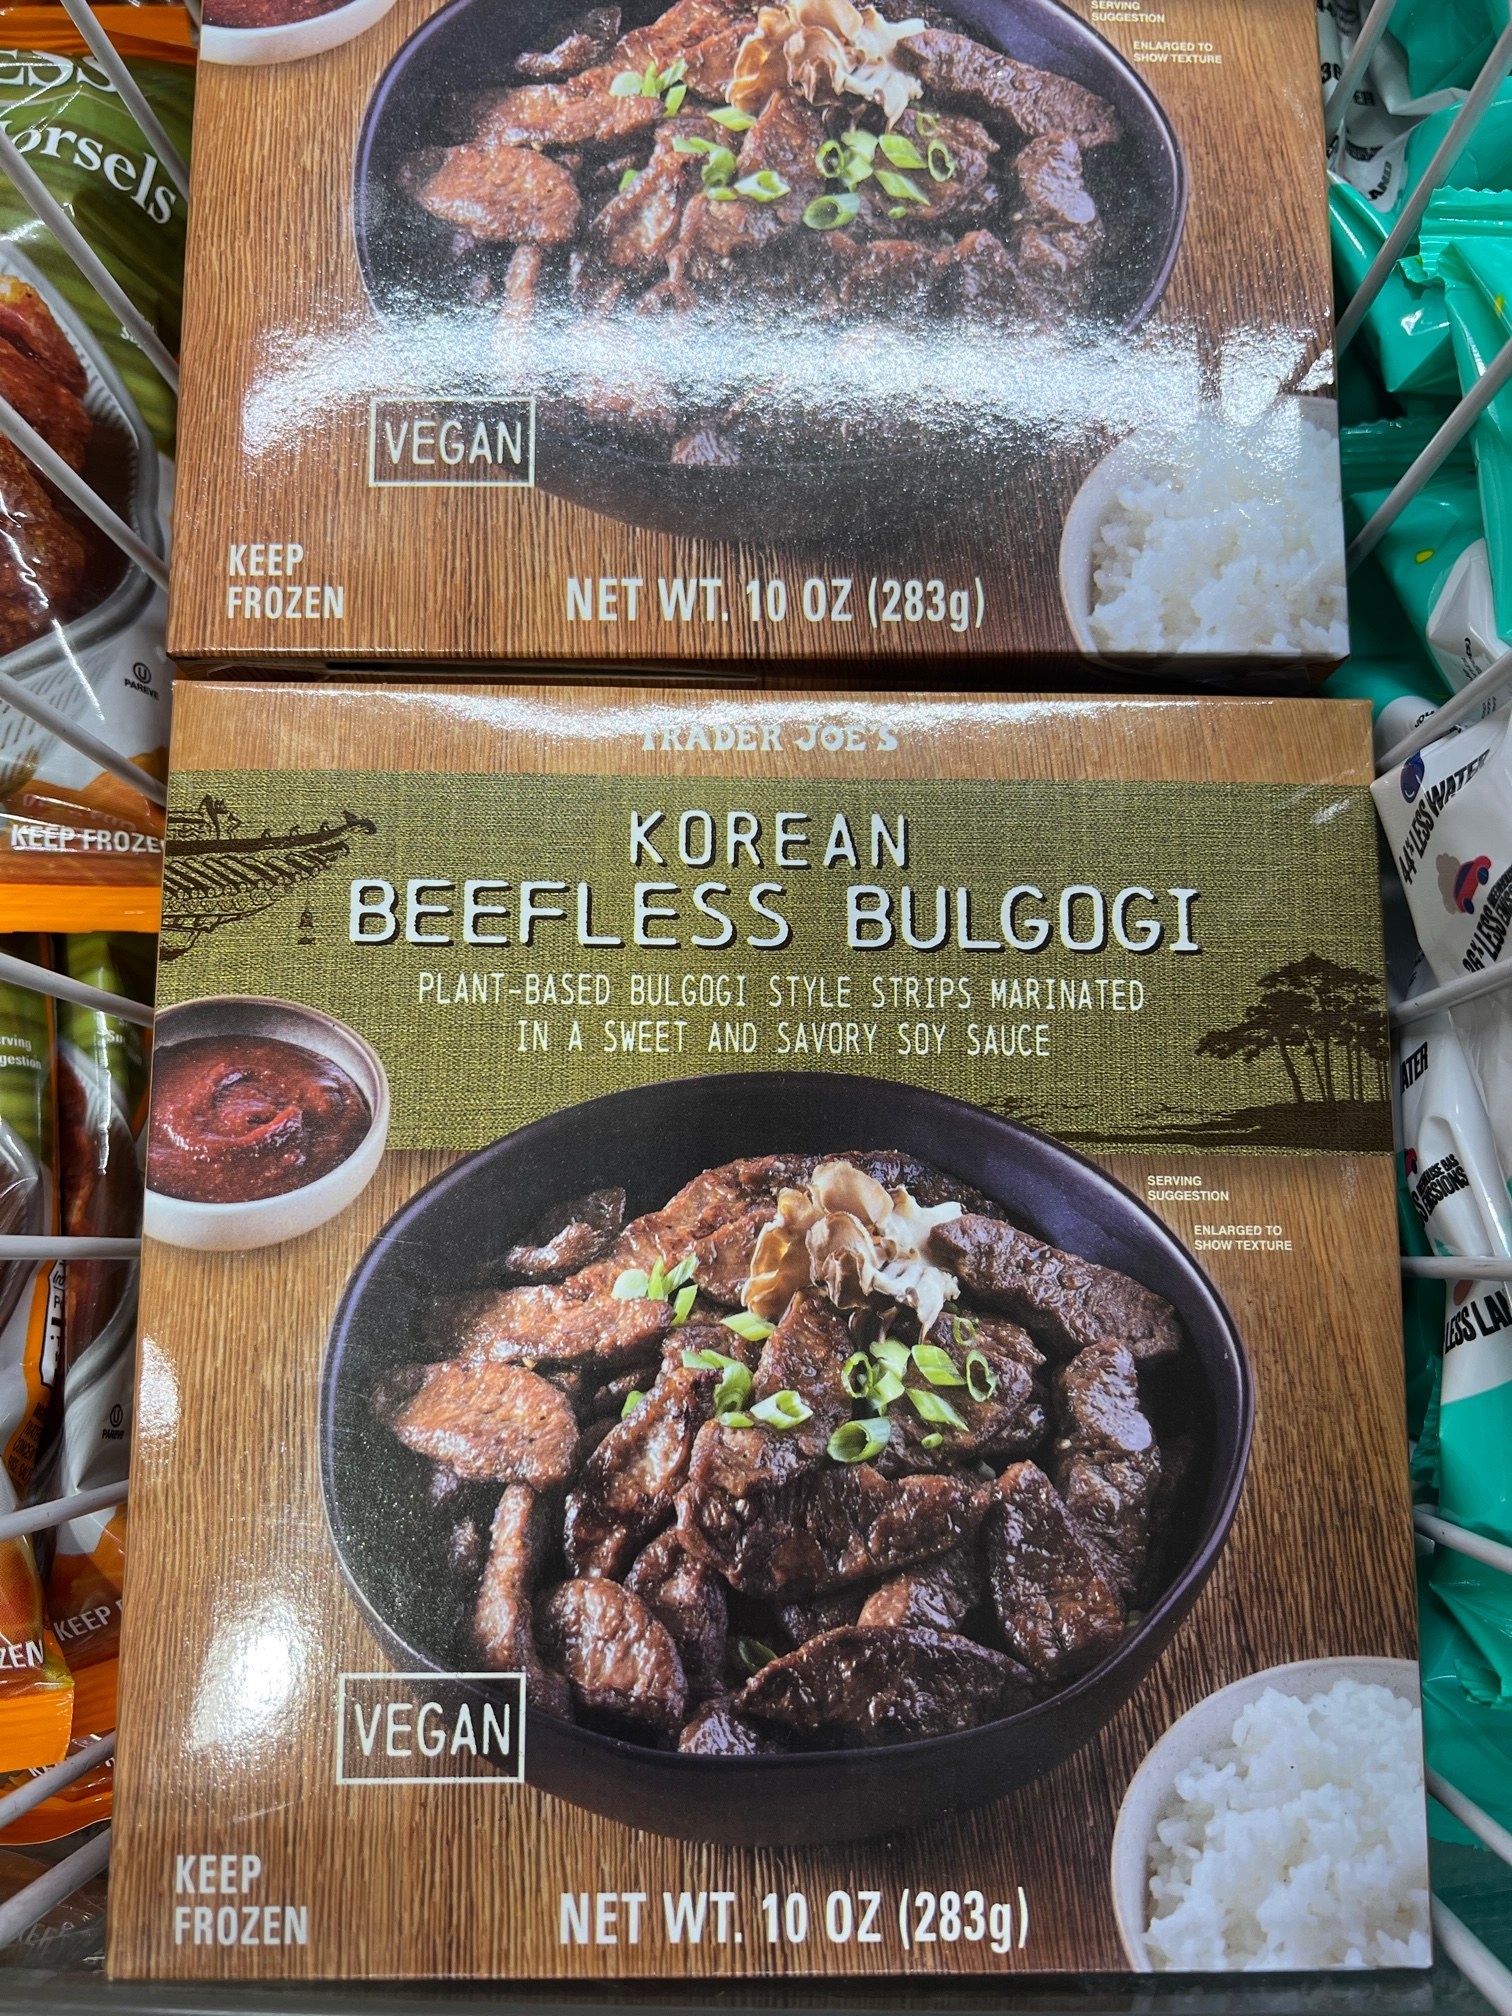 A package of Korean Beefless Bulgogi